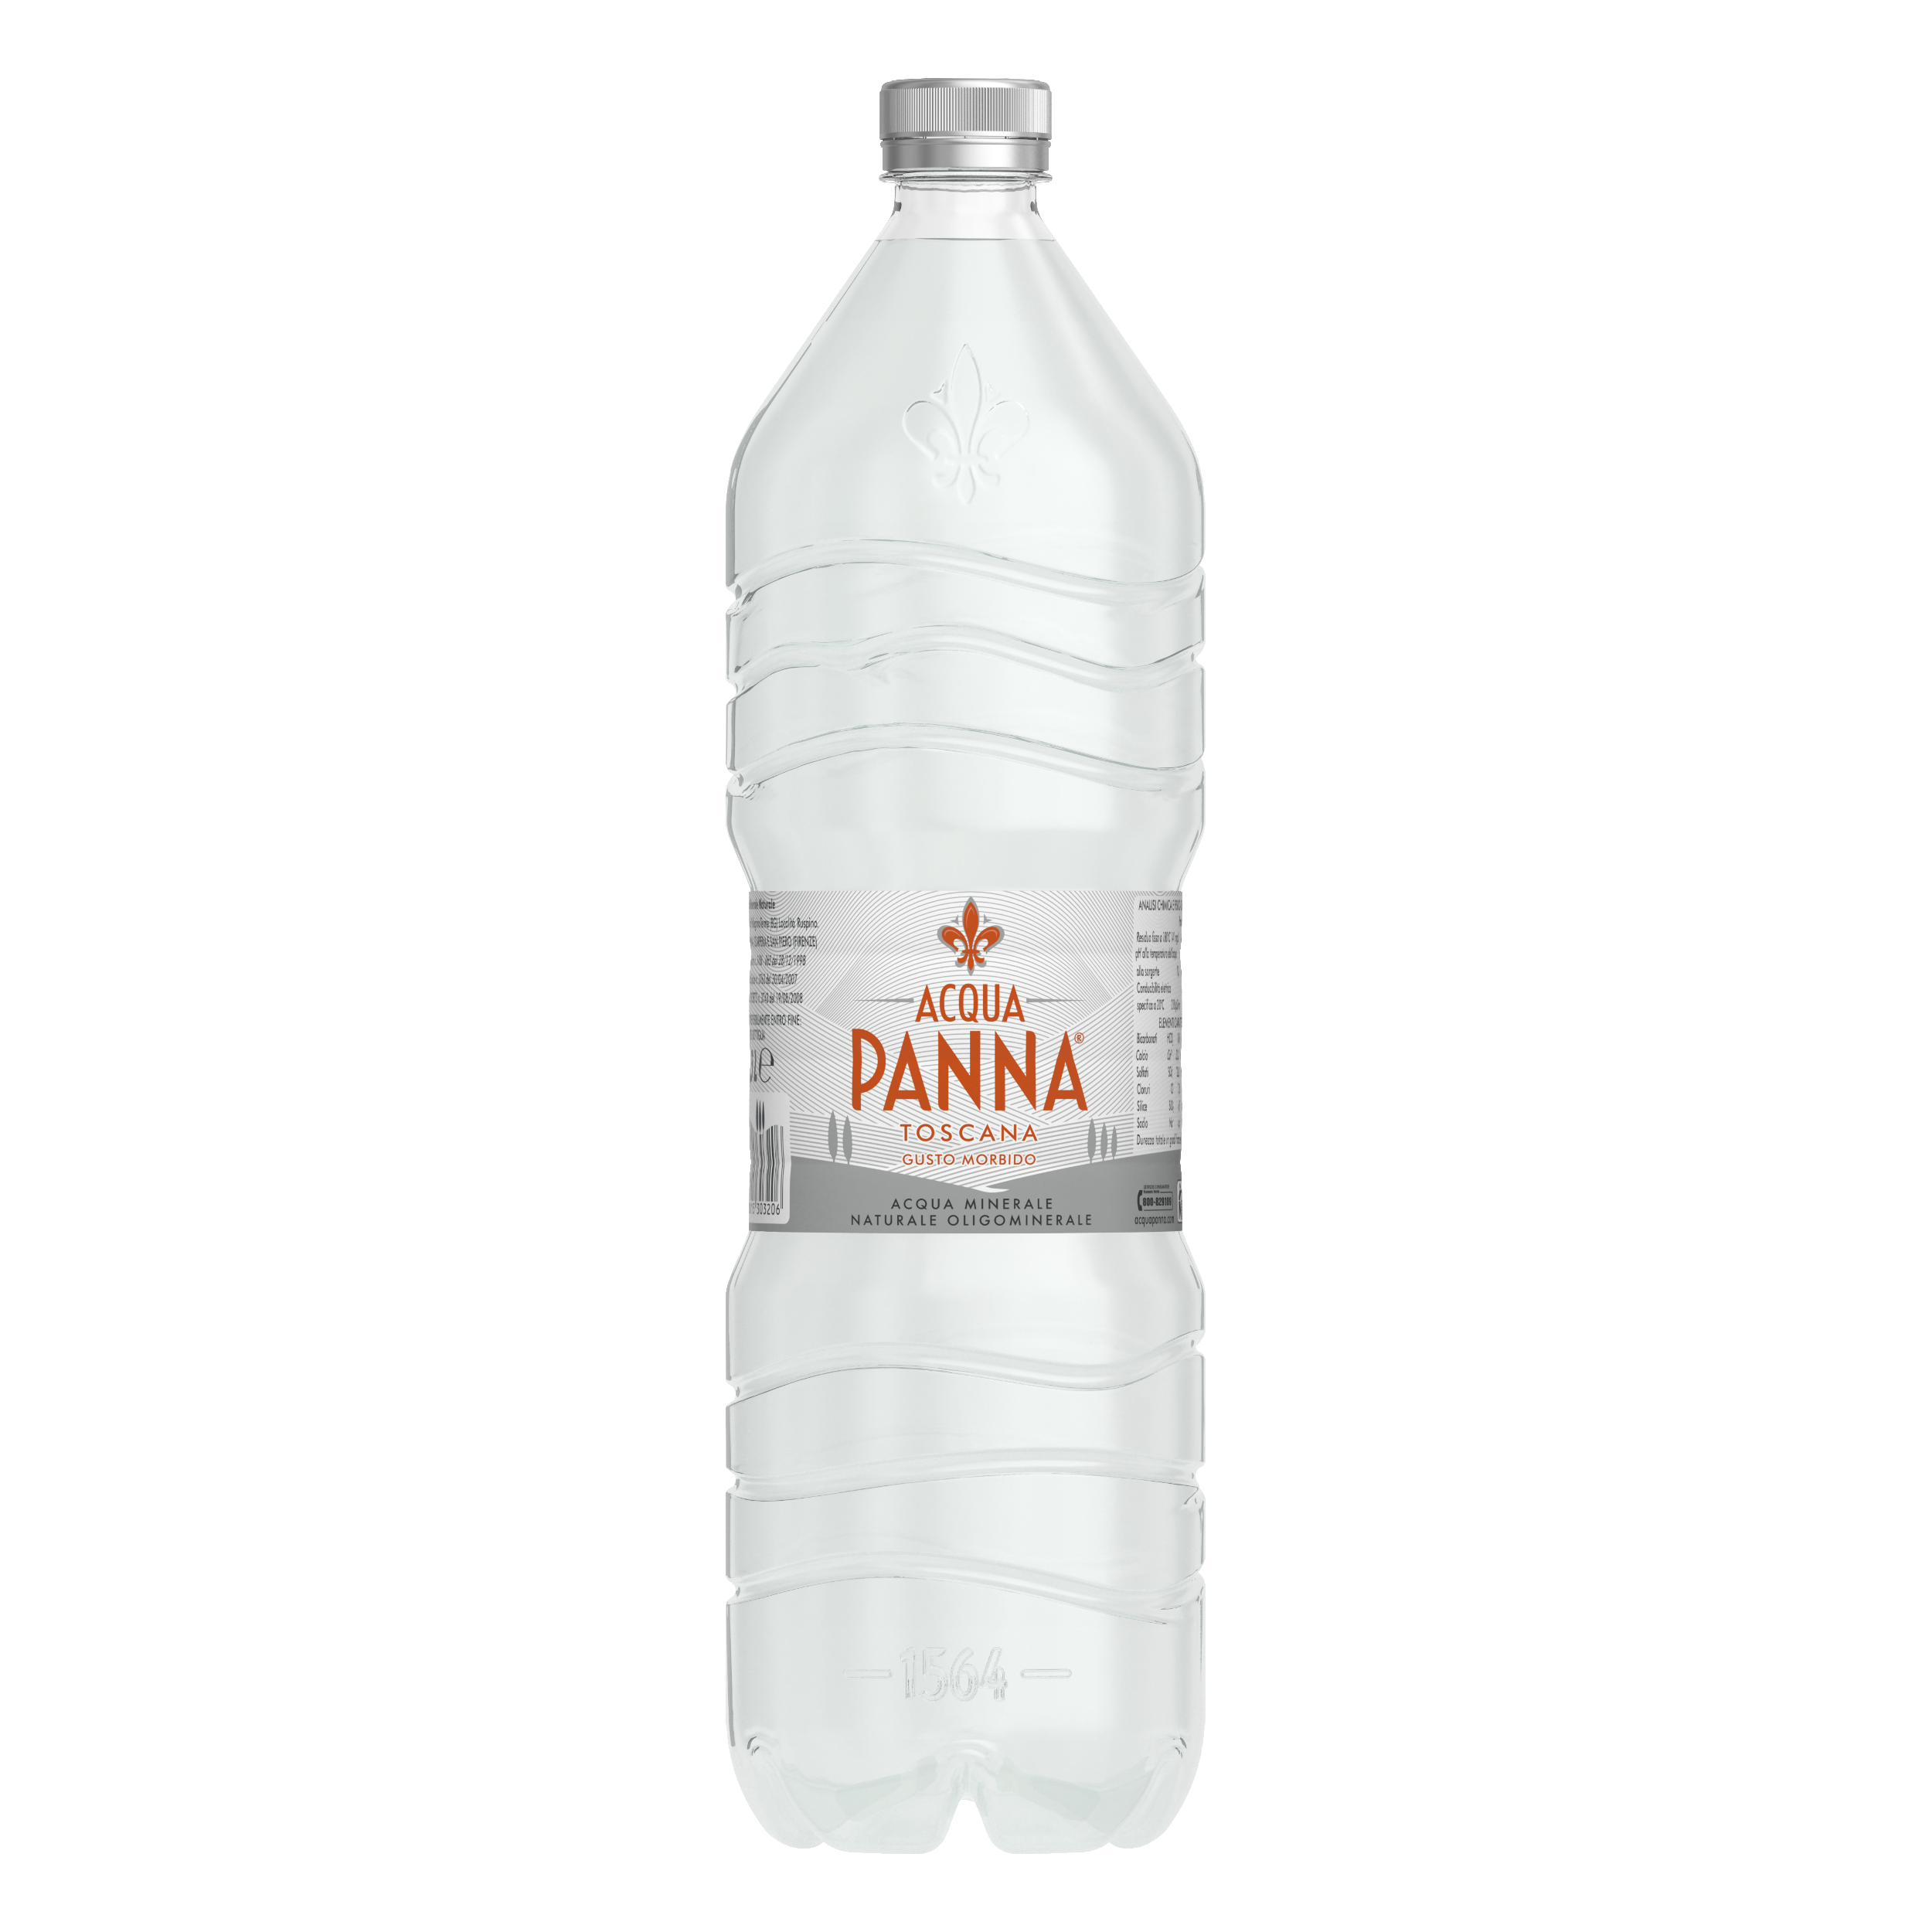 Acqua Panna Mineral Water 1500ml น้ำแร่ธรรมชาติ อควาปานน่า ขนาด 1.5 ลิตร (3113)